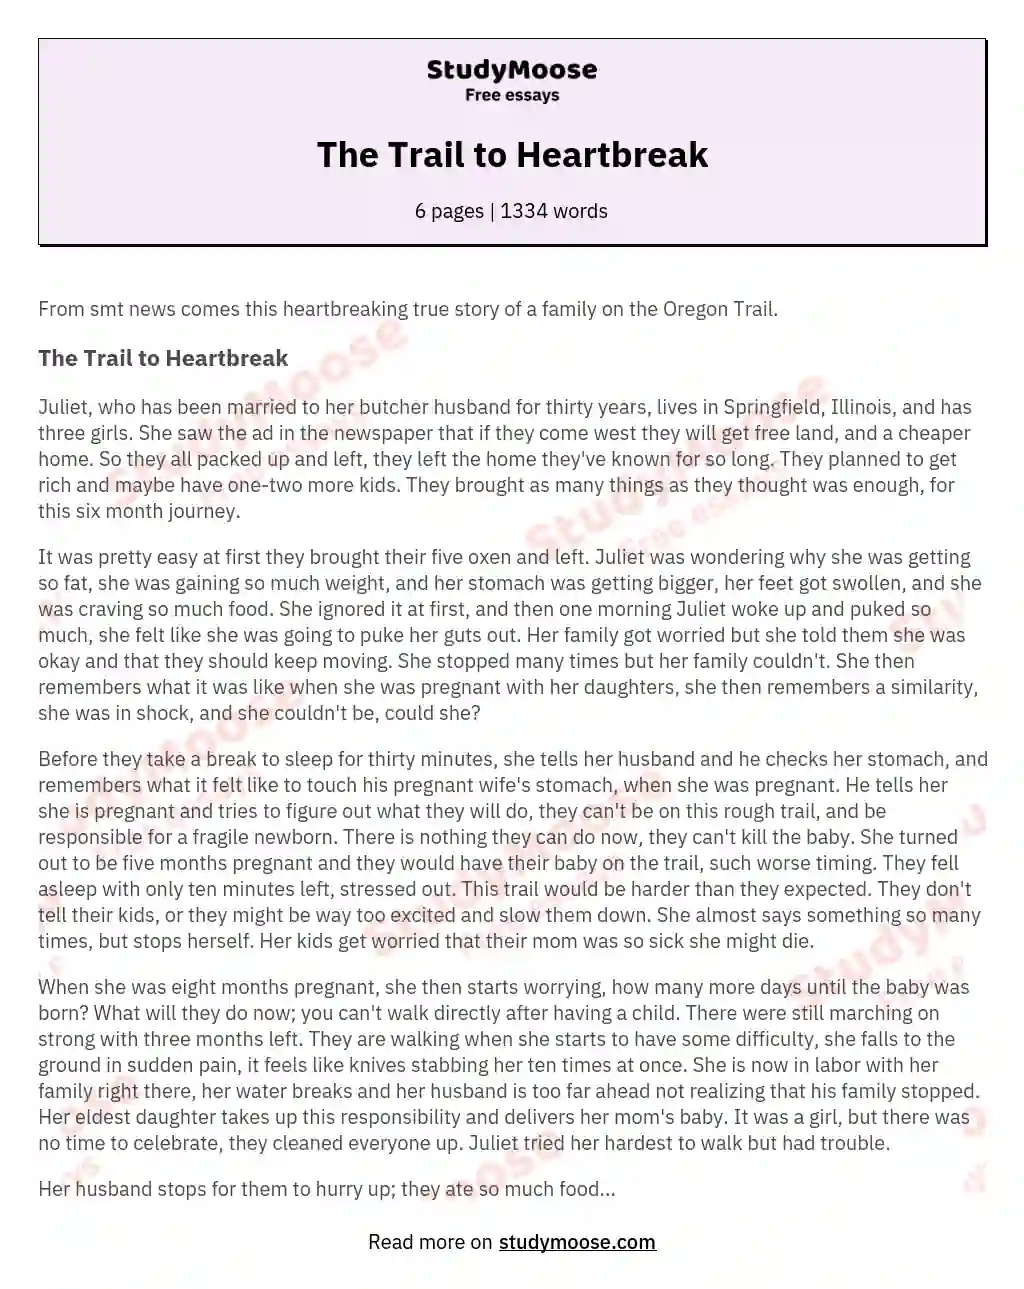 The Trail to Heartbreak essay